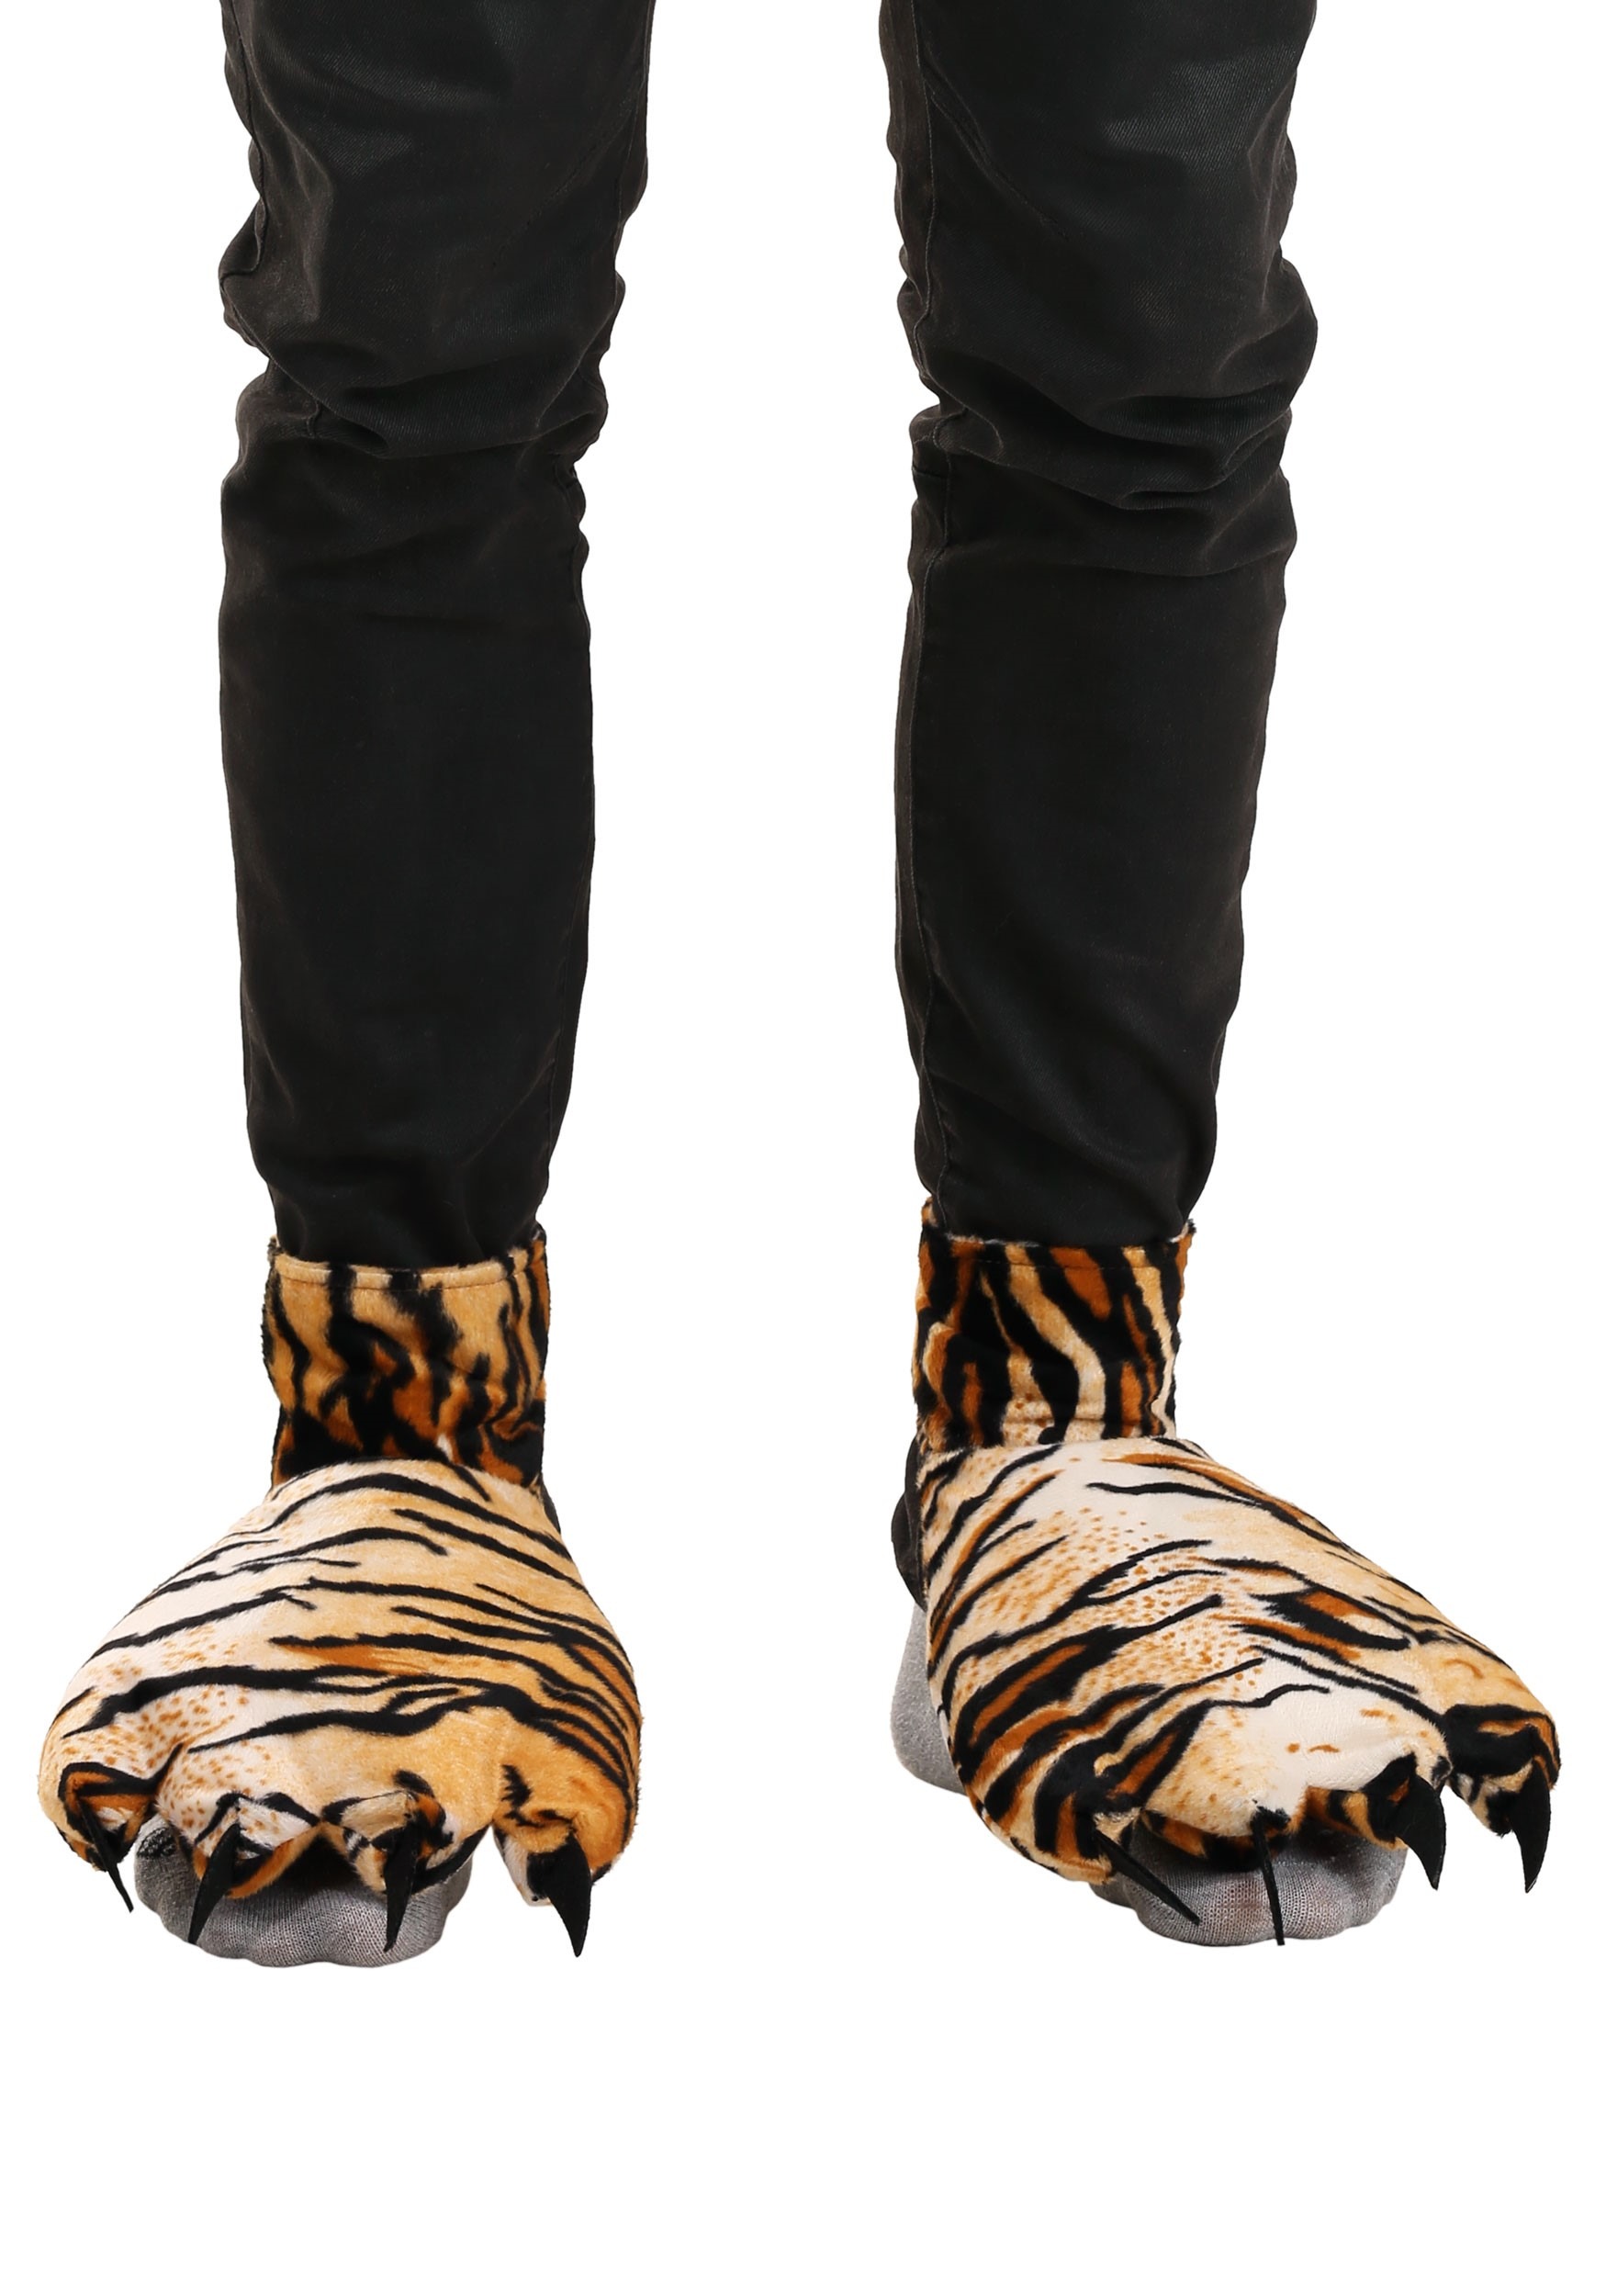 Tiger Shoe Cover Accessory